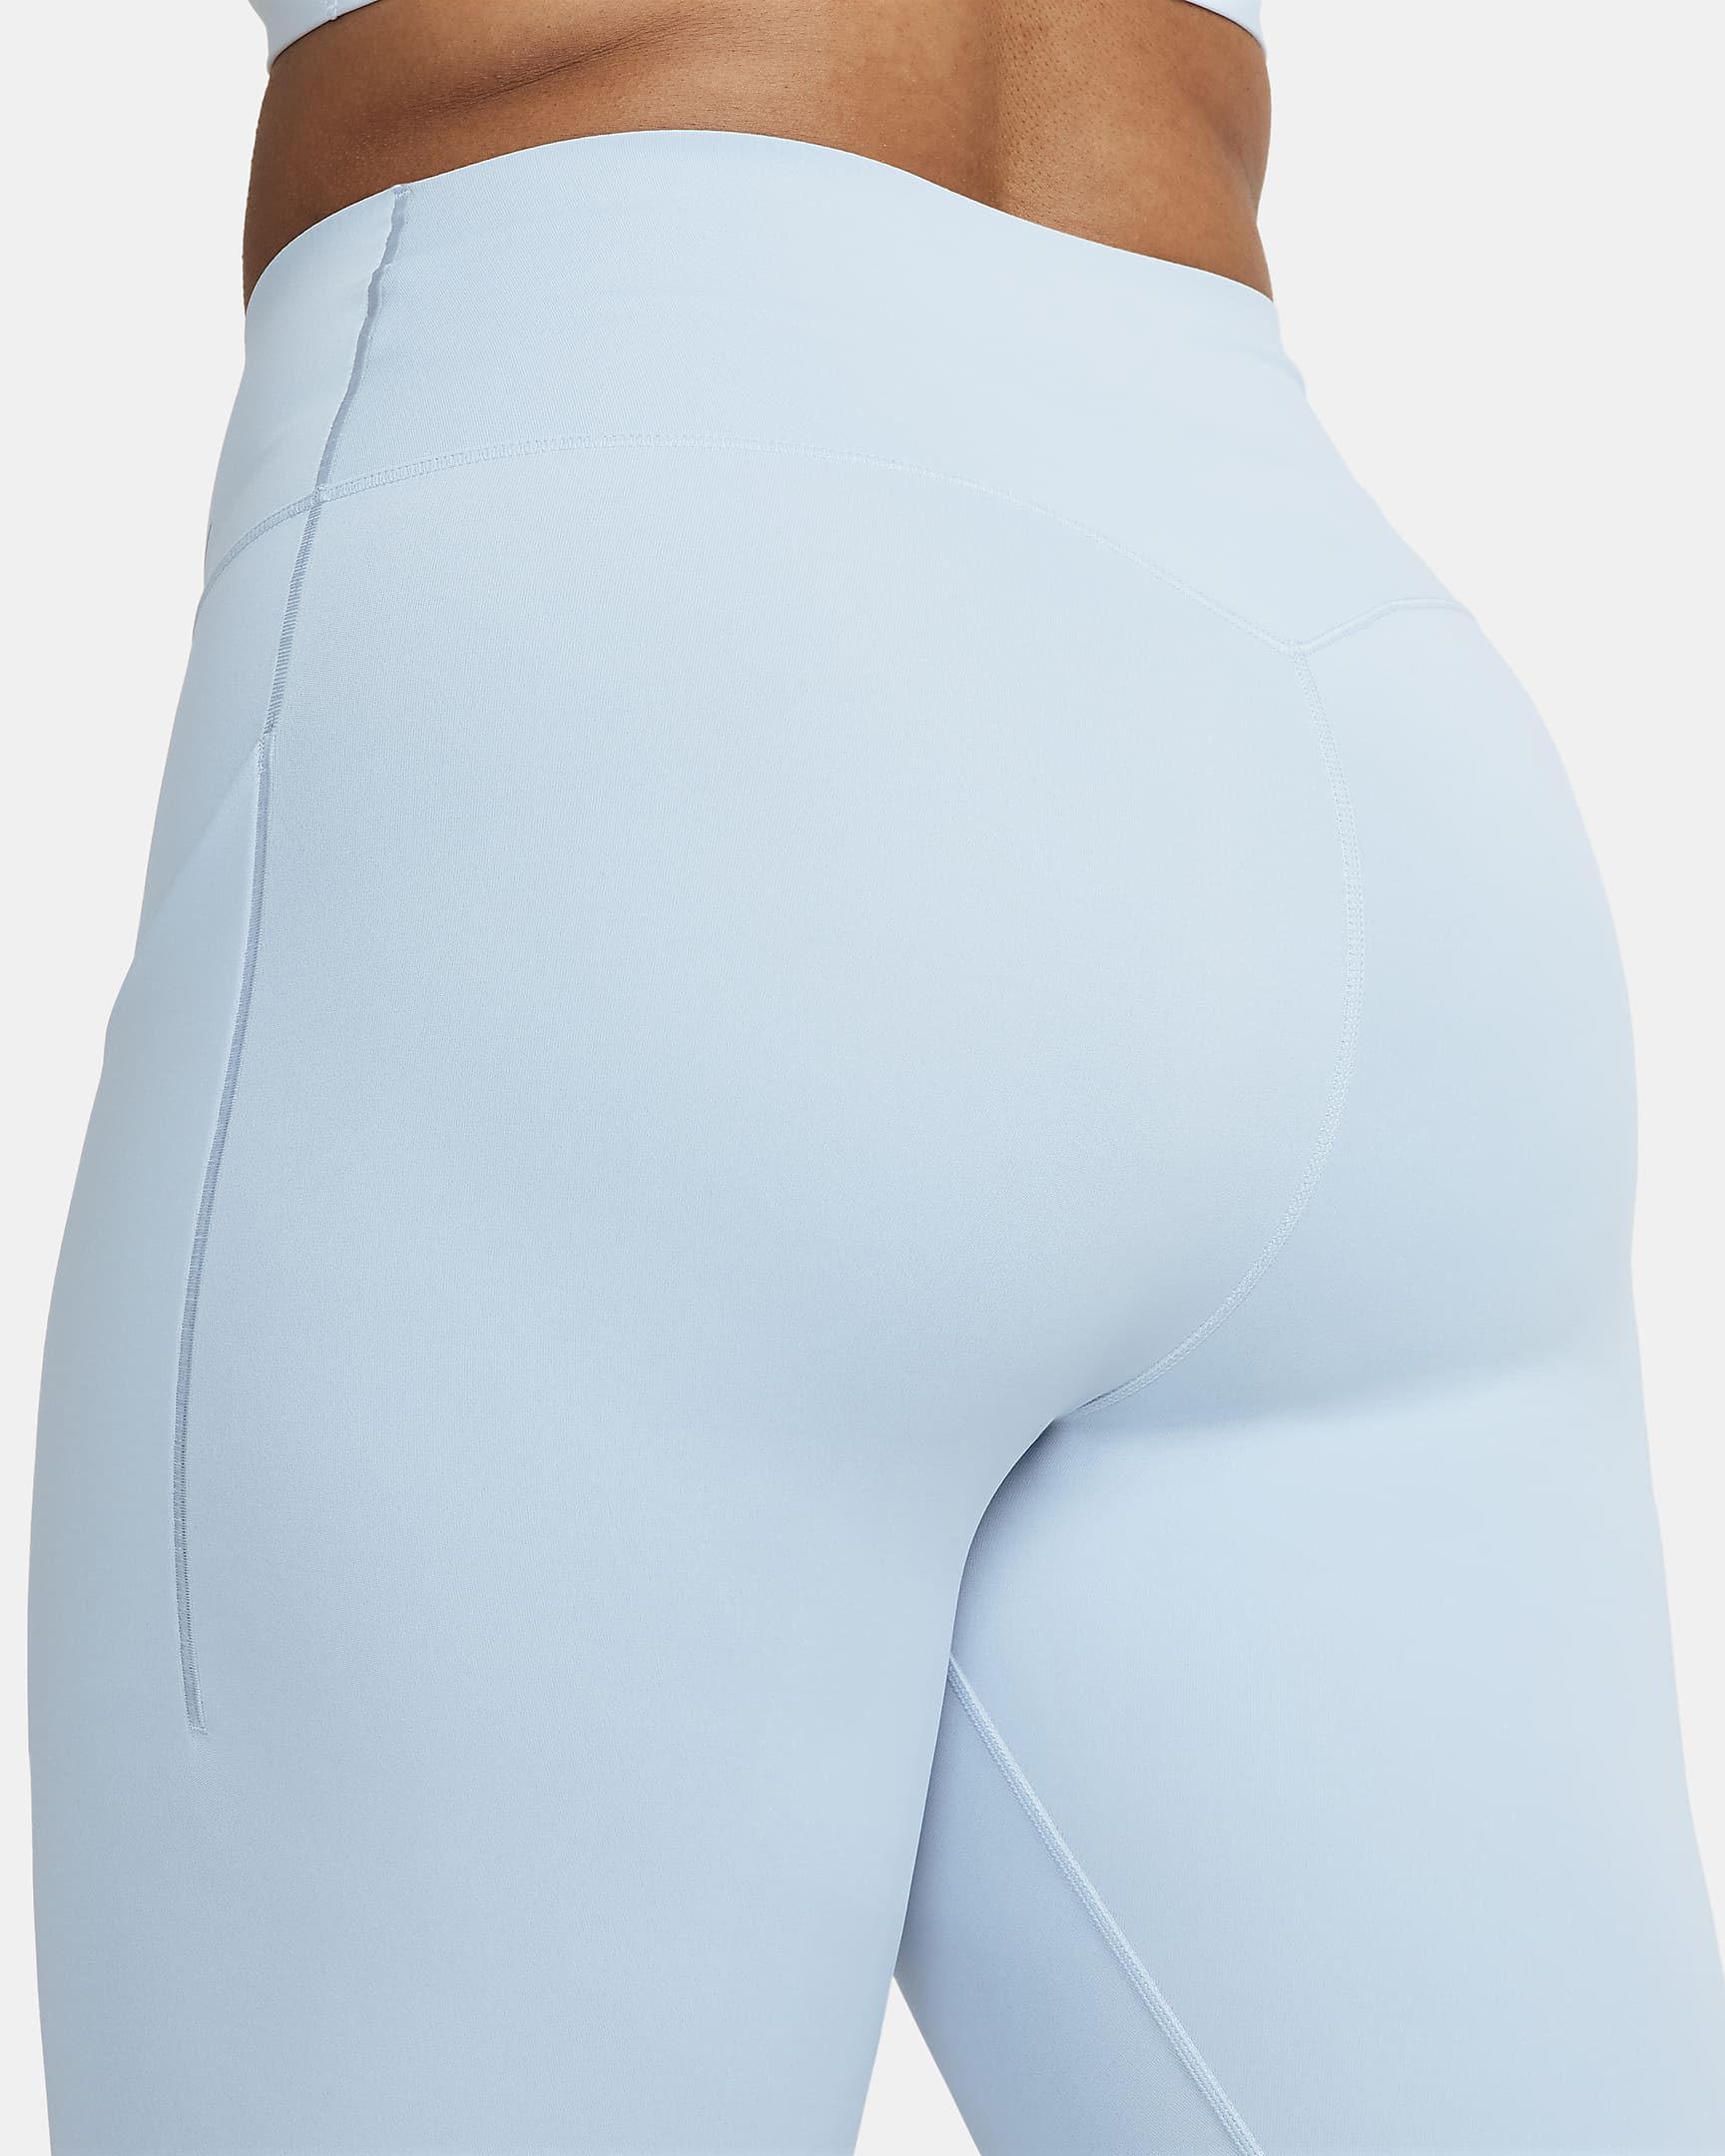 Nike Universa Women's Medium-Support High-Waisted Full-Length Leggings with Pockets - Light Armoury Blue/Black